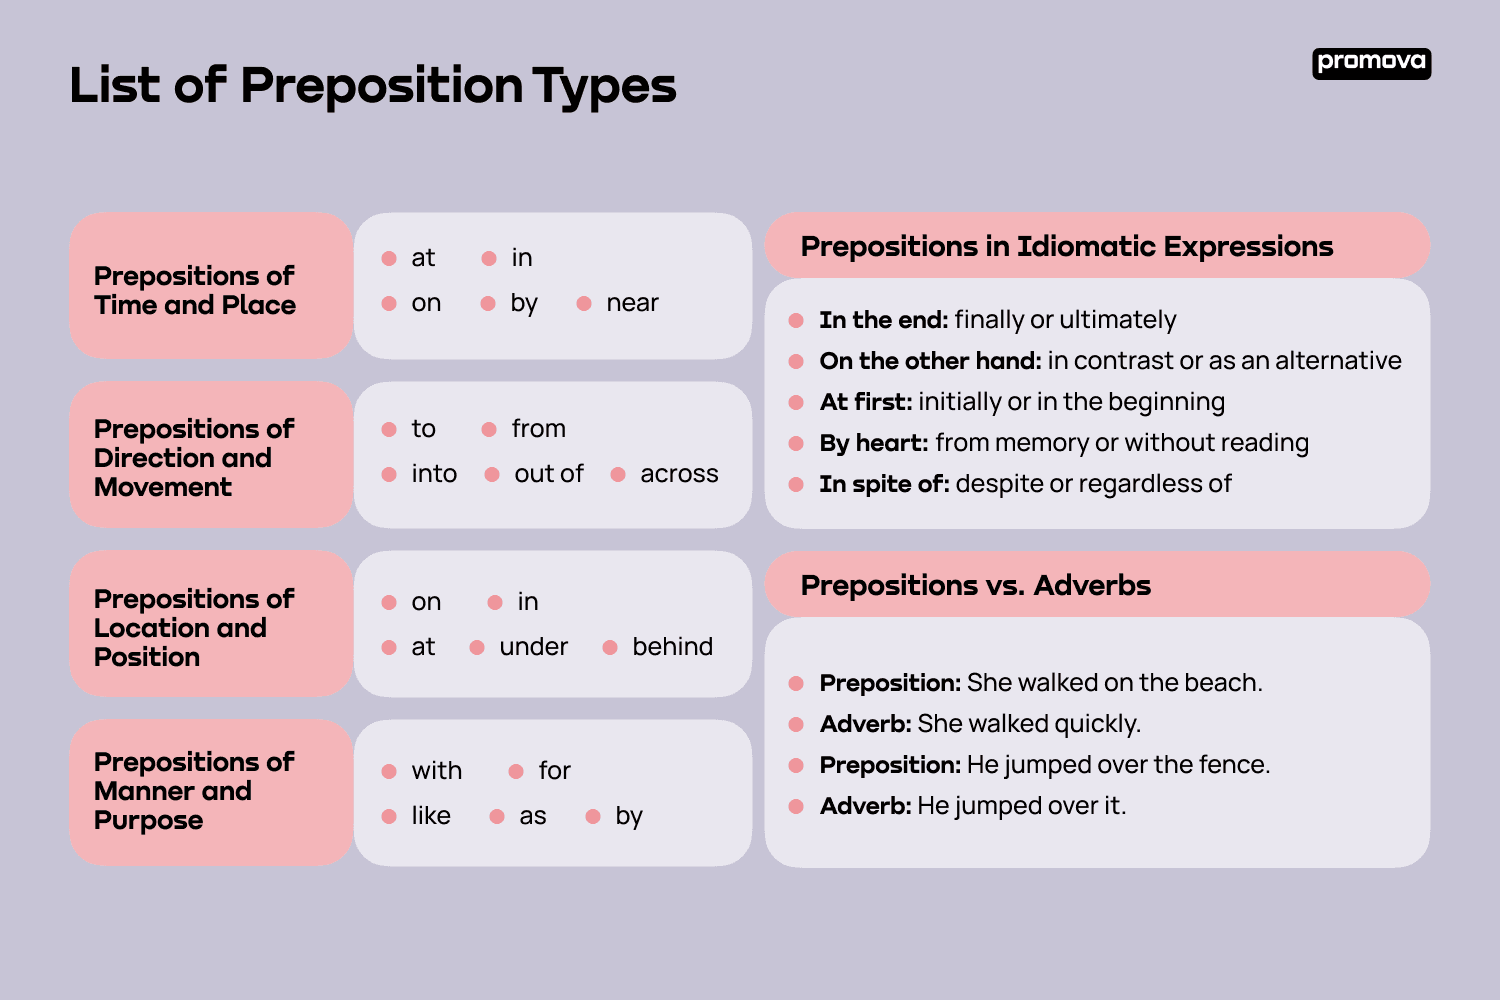 List of Preposition Types